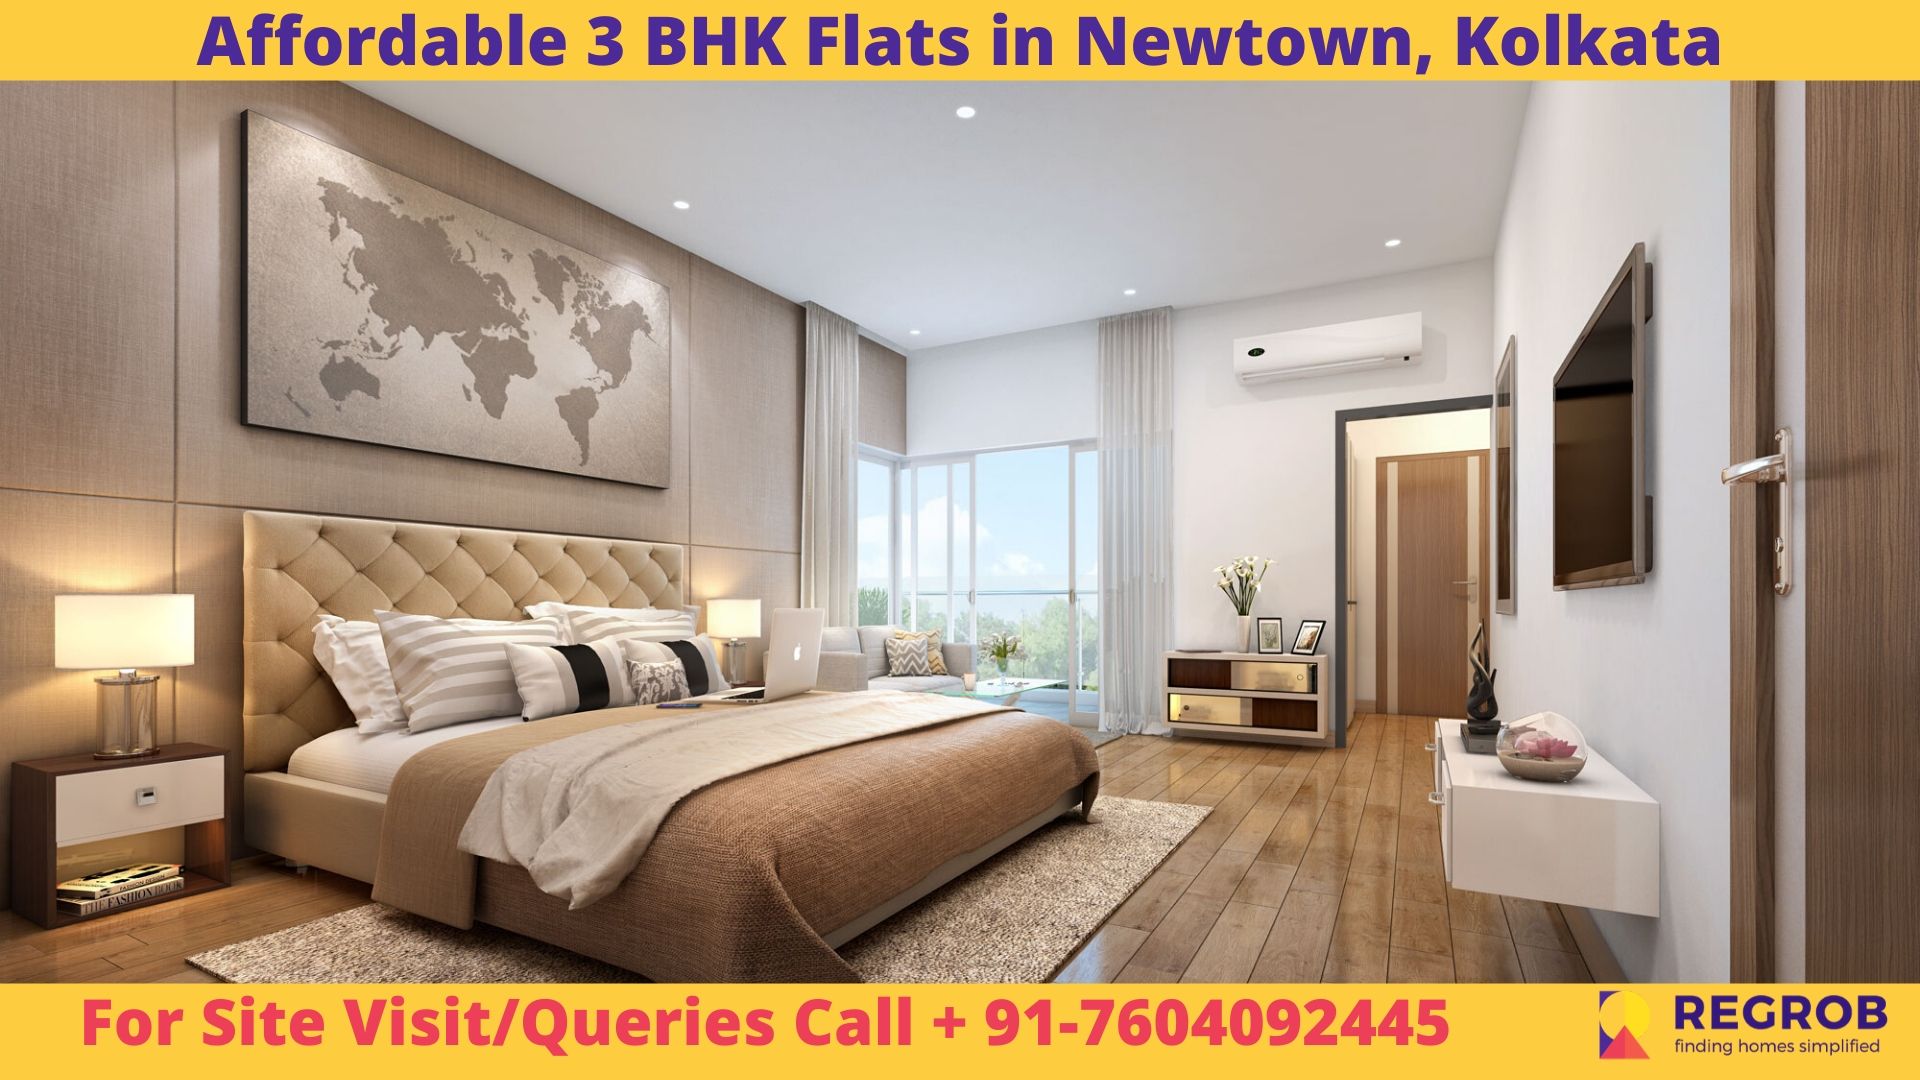 Affordable 3 BHK Flats in Newtown, Kolkata